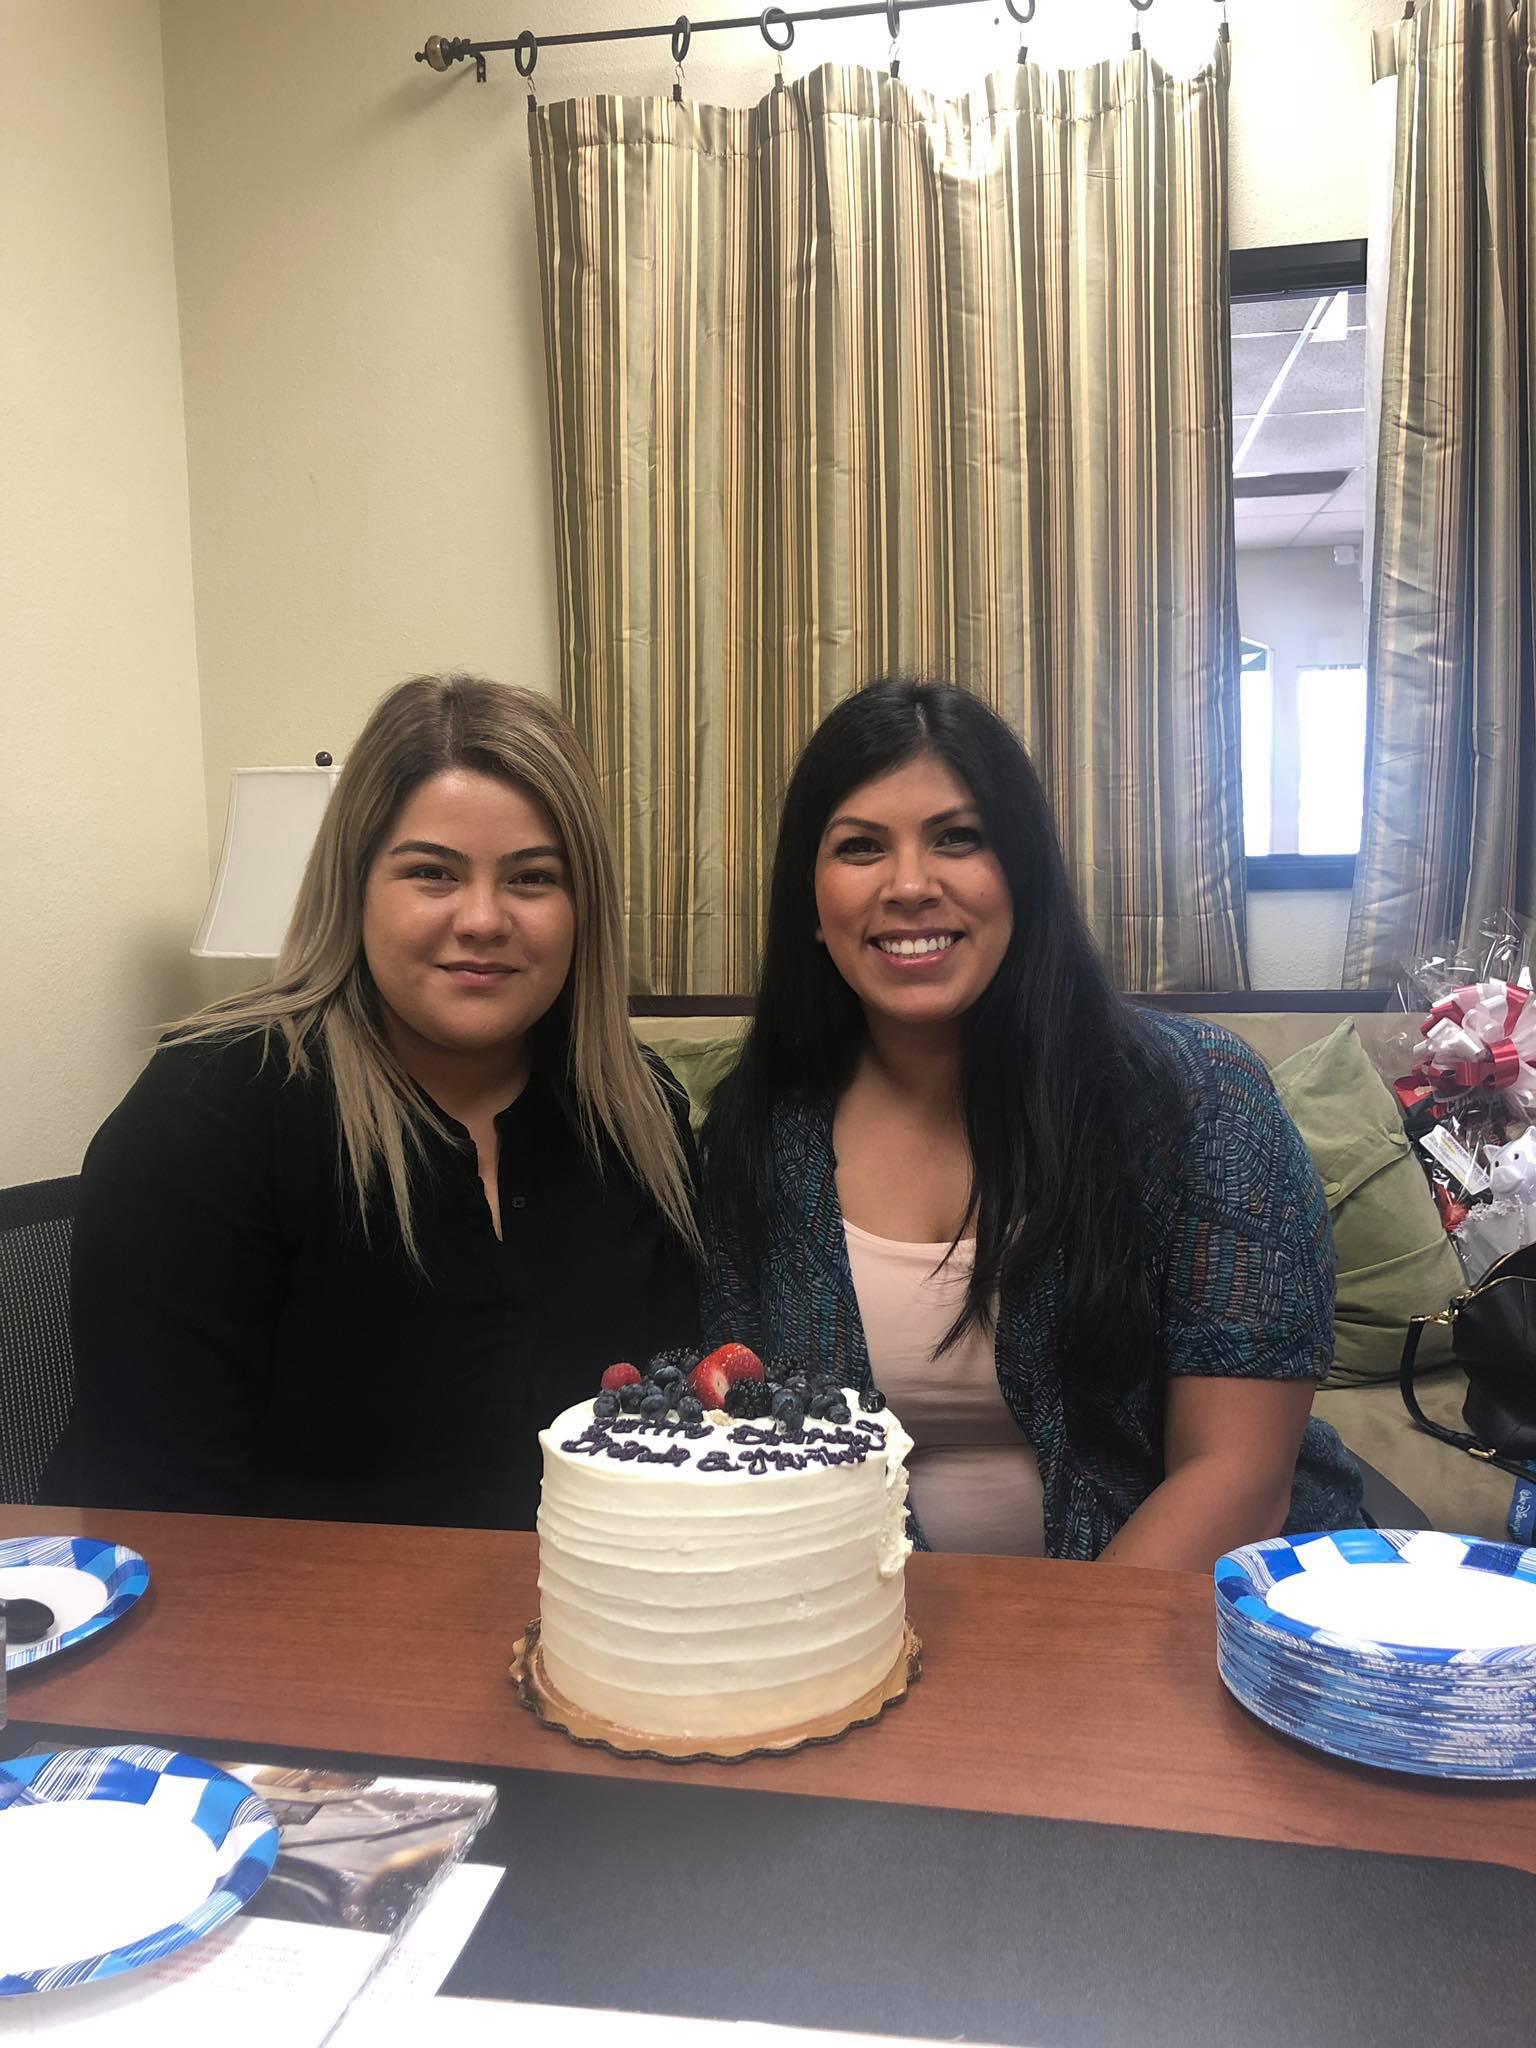 Celebrating Brenda and Maribel’s birthday with a special treat!